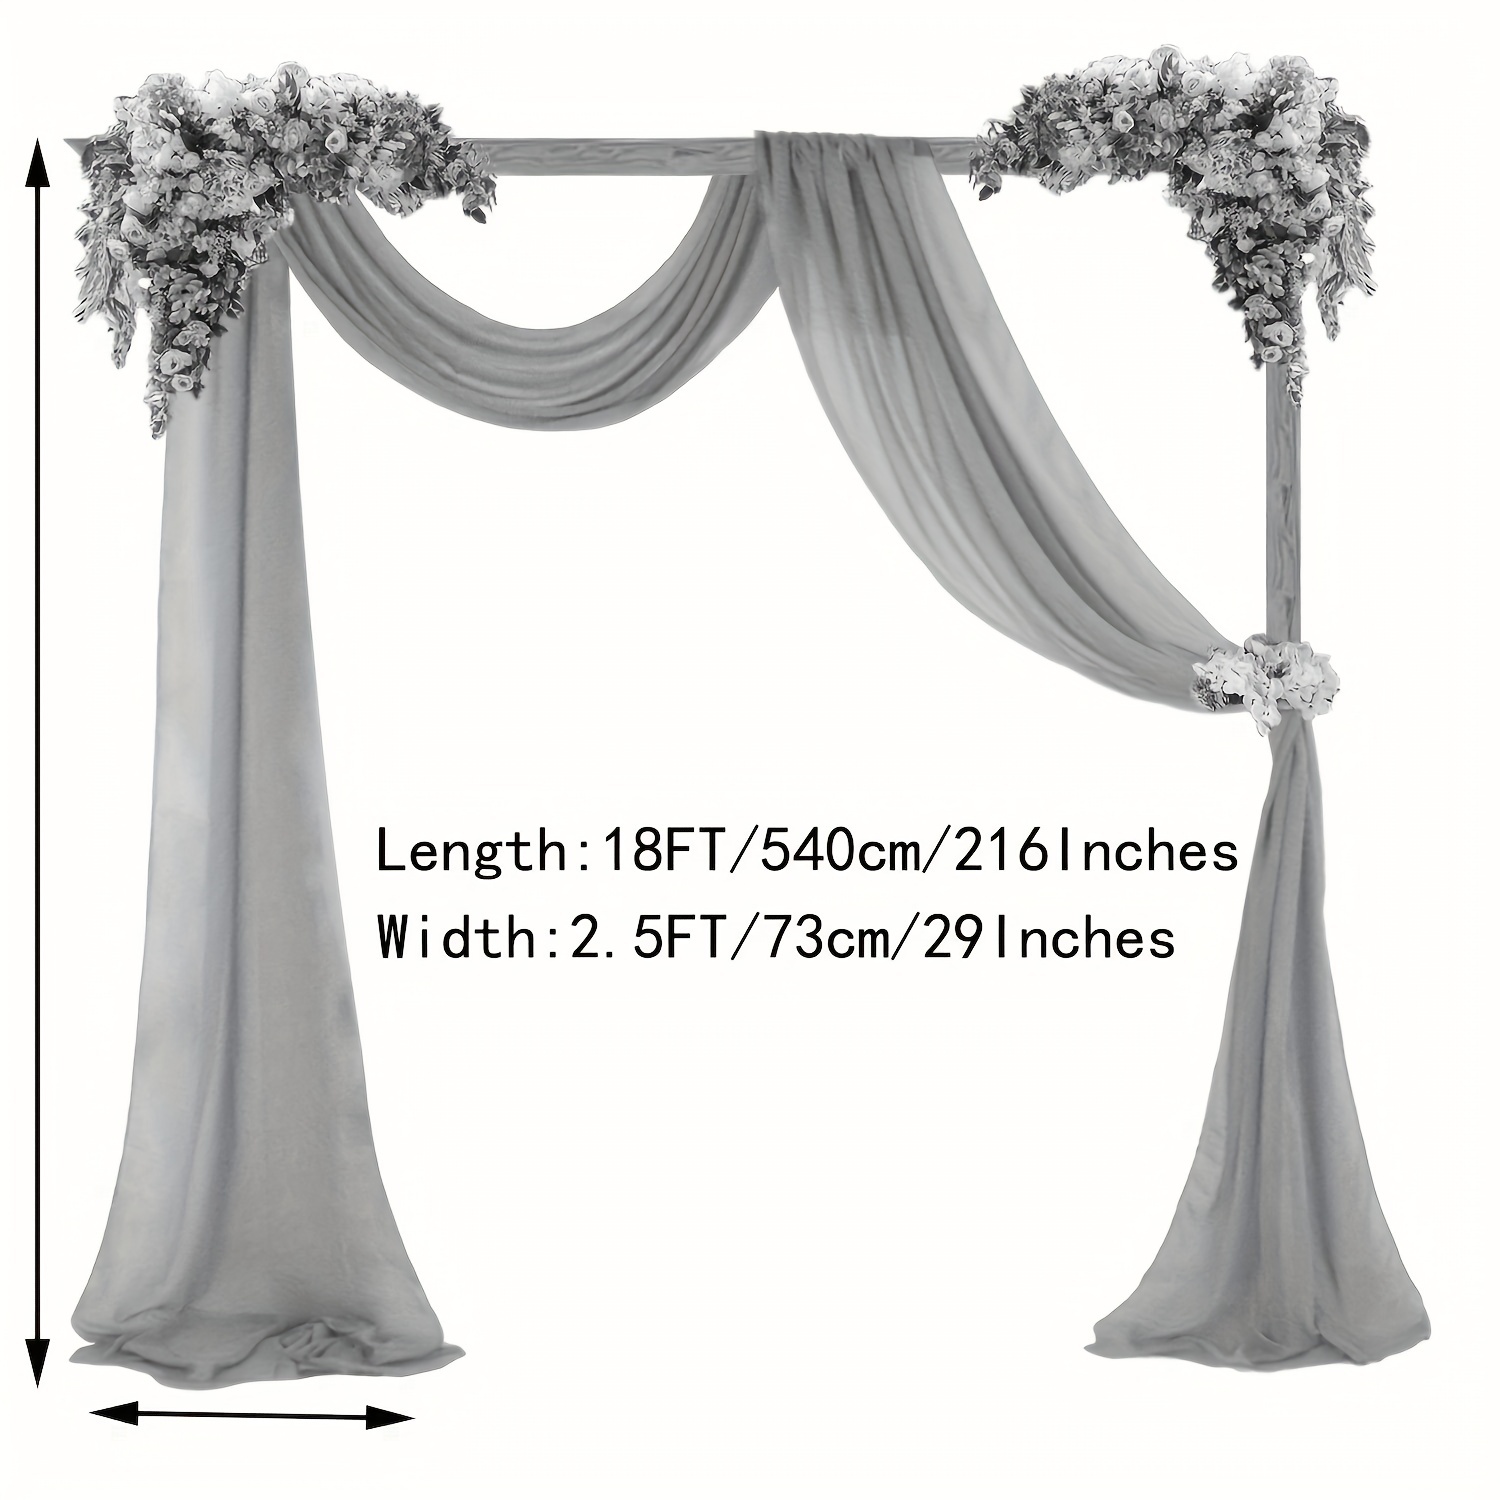 Albassa Wedding Arch Draping Fabric, 2 Panel 28 x 19Ft White Chiffon  Fabric Drapery Sheer Fabric Drapes Backdrop Curtain for Wedding Ceremony  Party